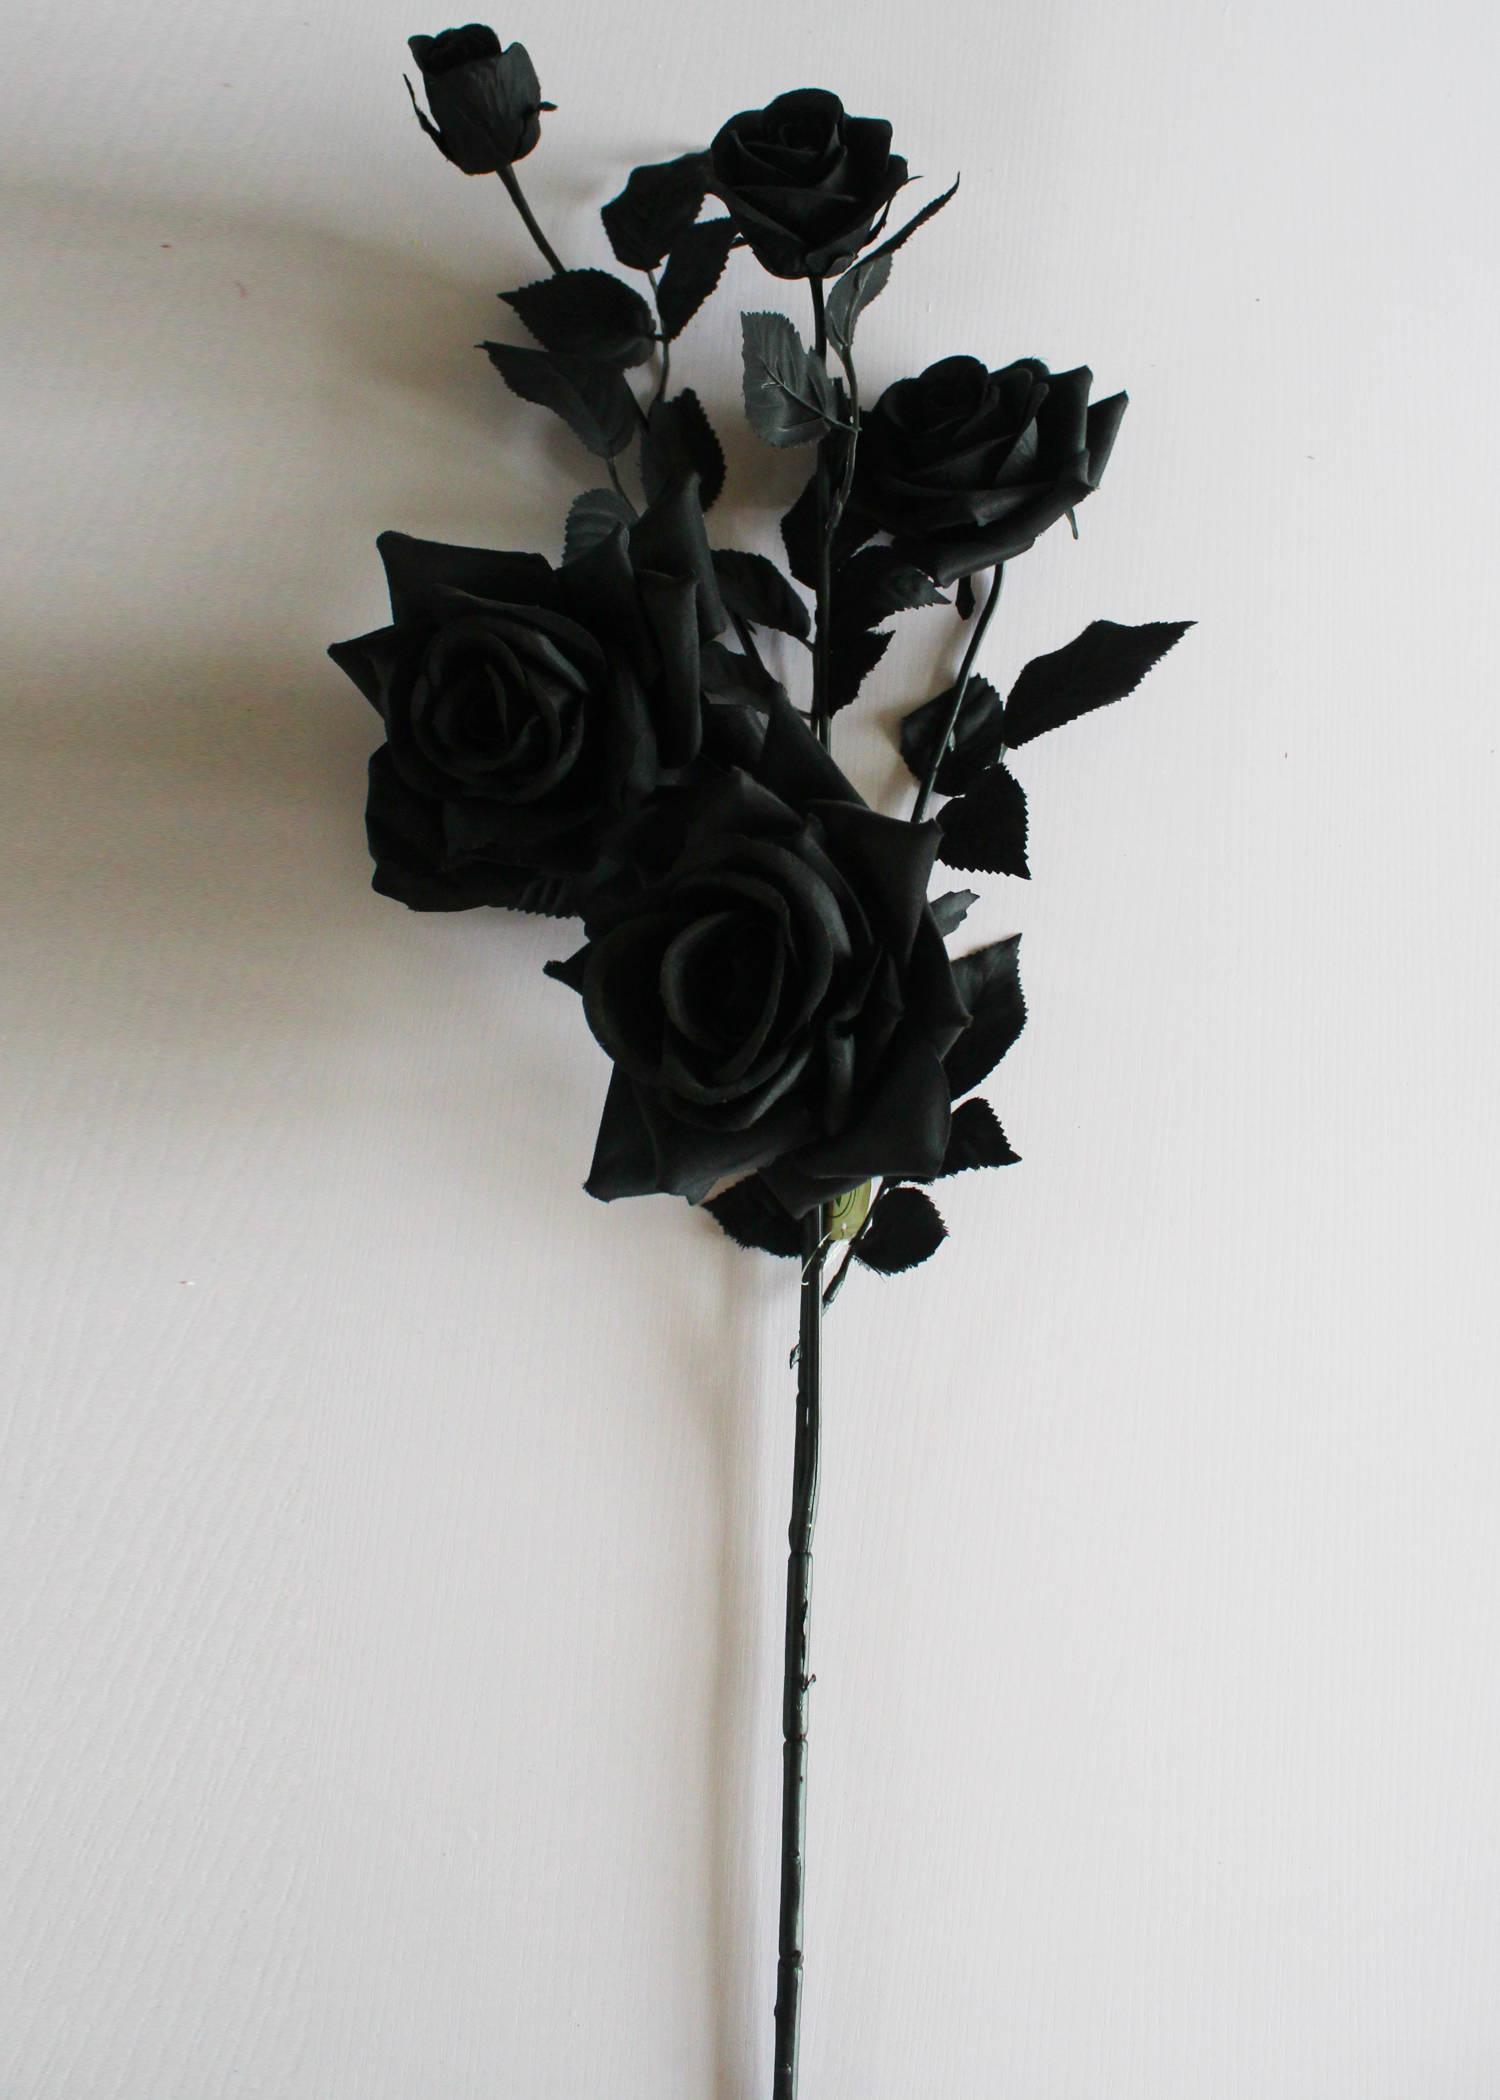 Caption: Mystic Beauty: Black Rose Iphone Wallpaper Background